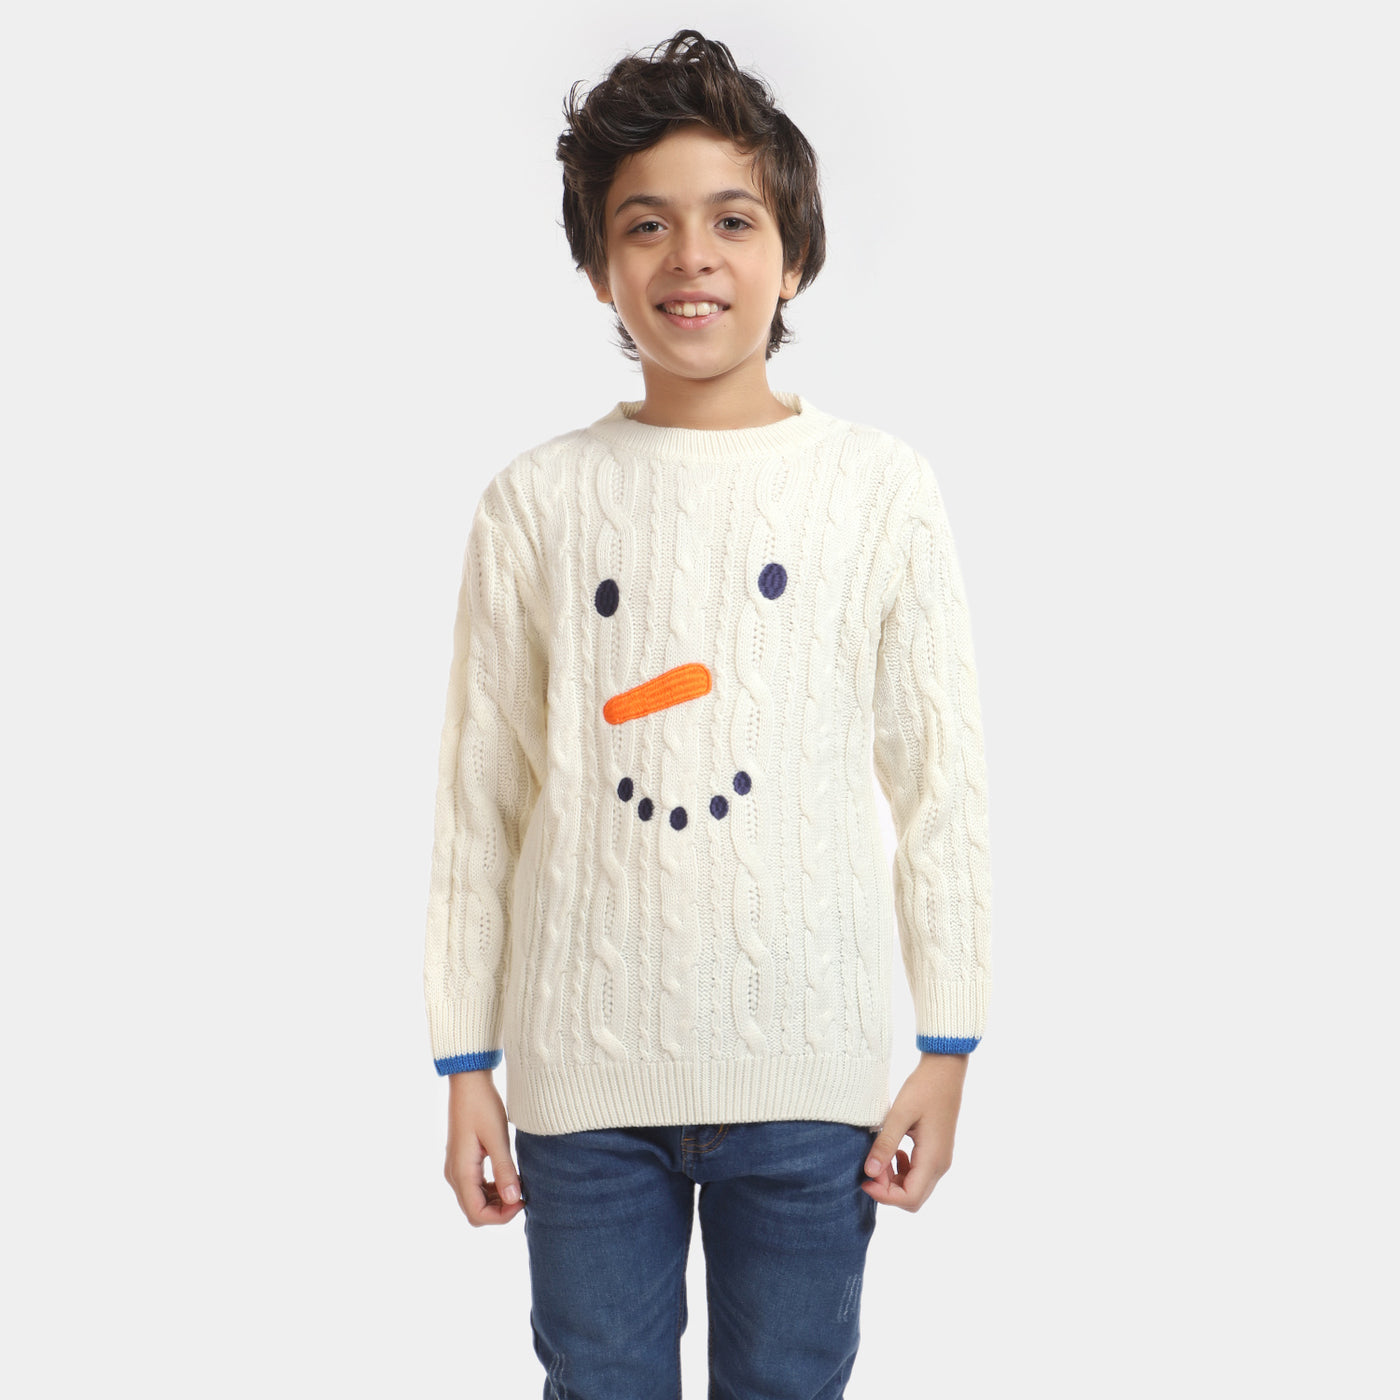 Boys Acrylic Full Sleeves Sweater -White